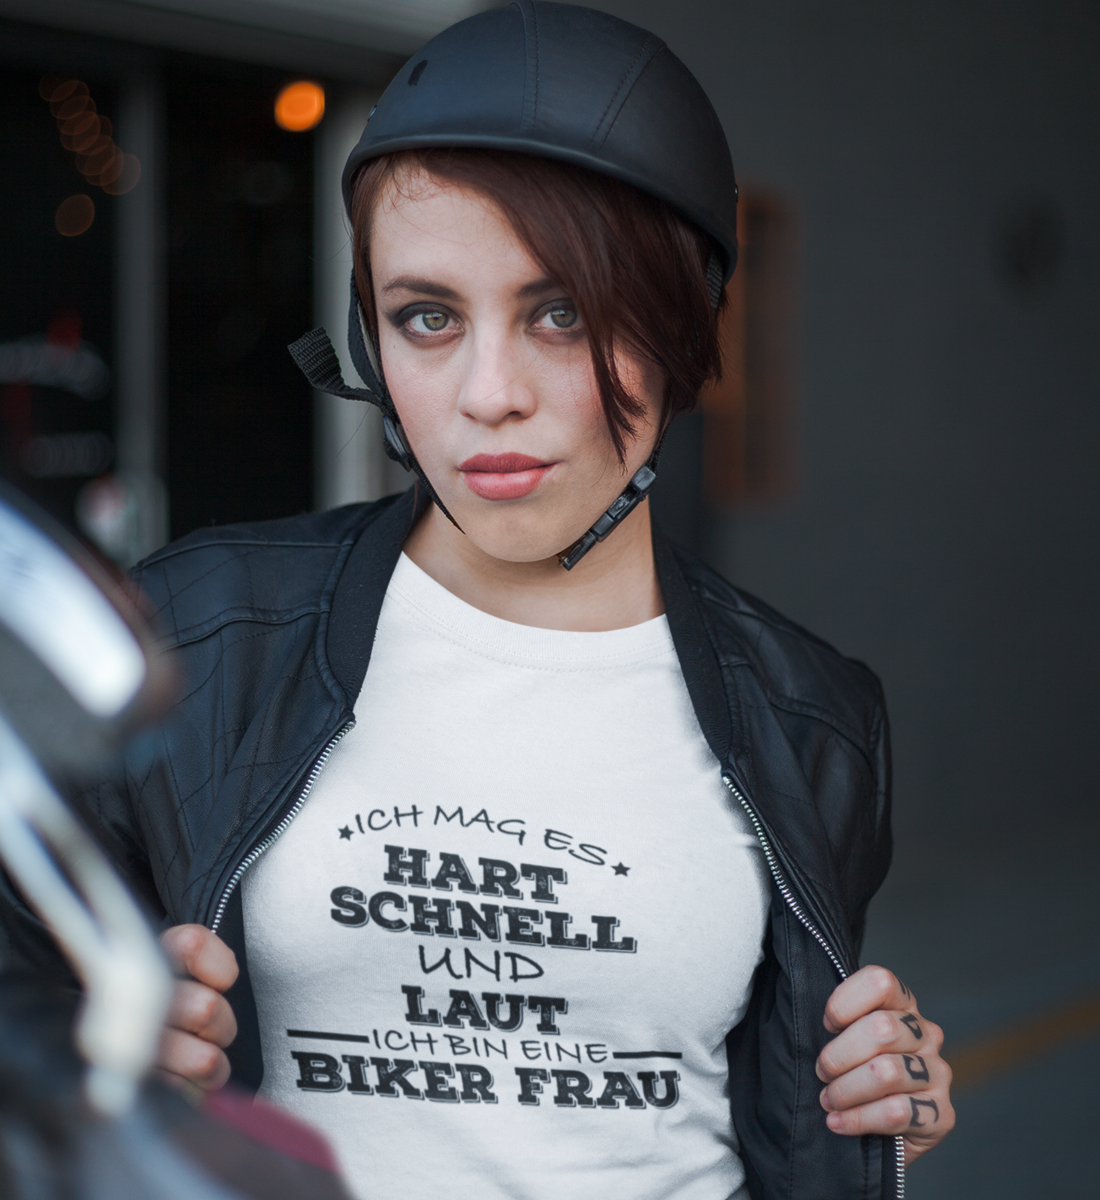 Biker Frau - Damen T-Shirt